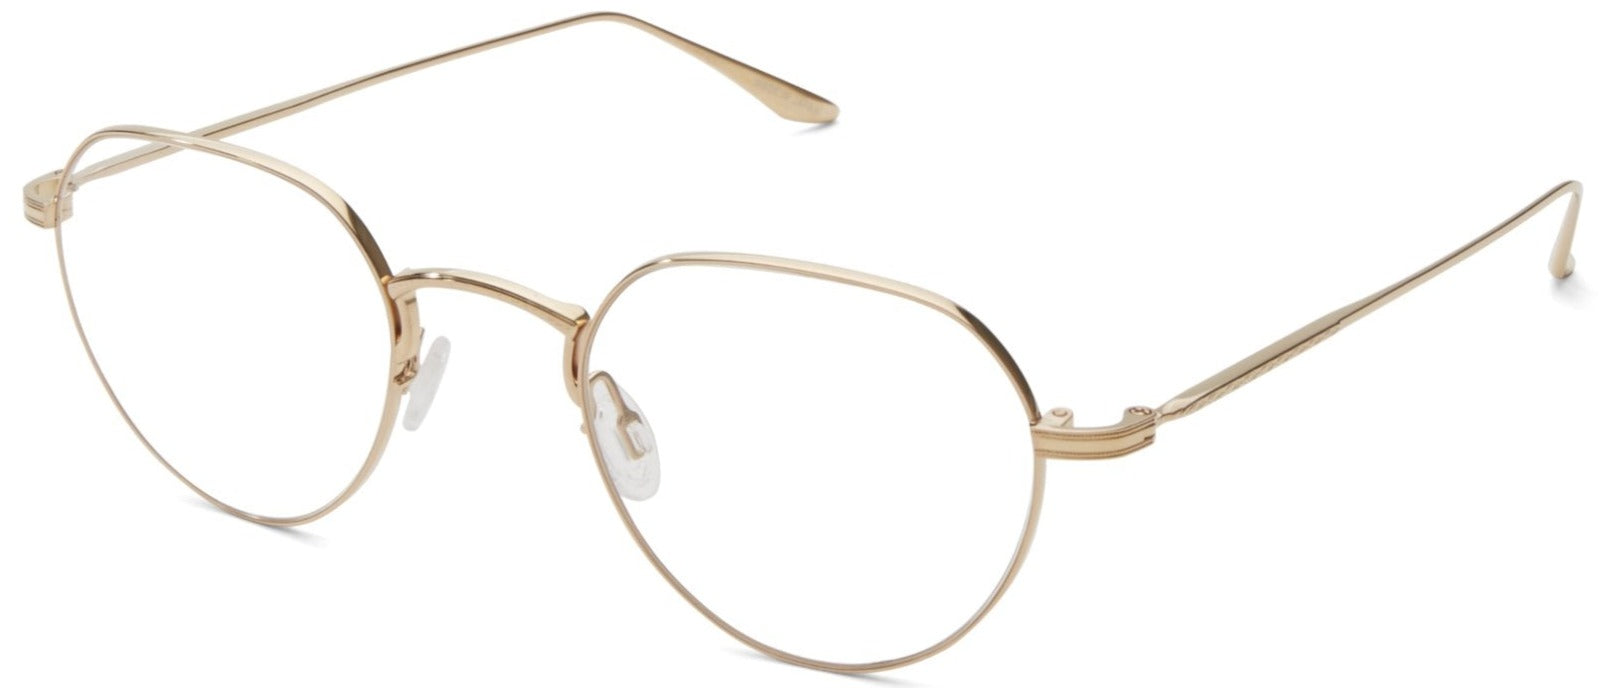 Alexander Daas - Barton Perreira Orlov Eyeglasses - Gold - Side View